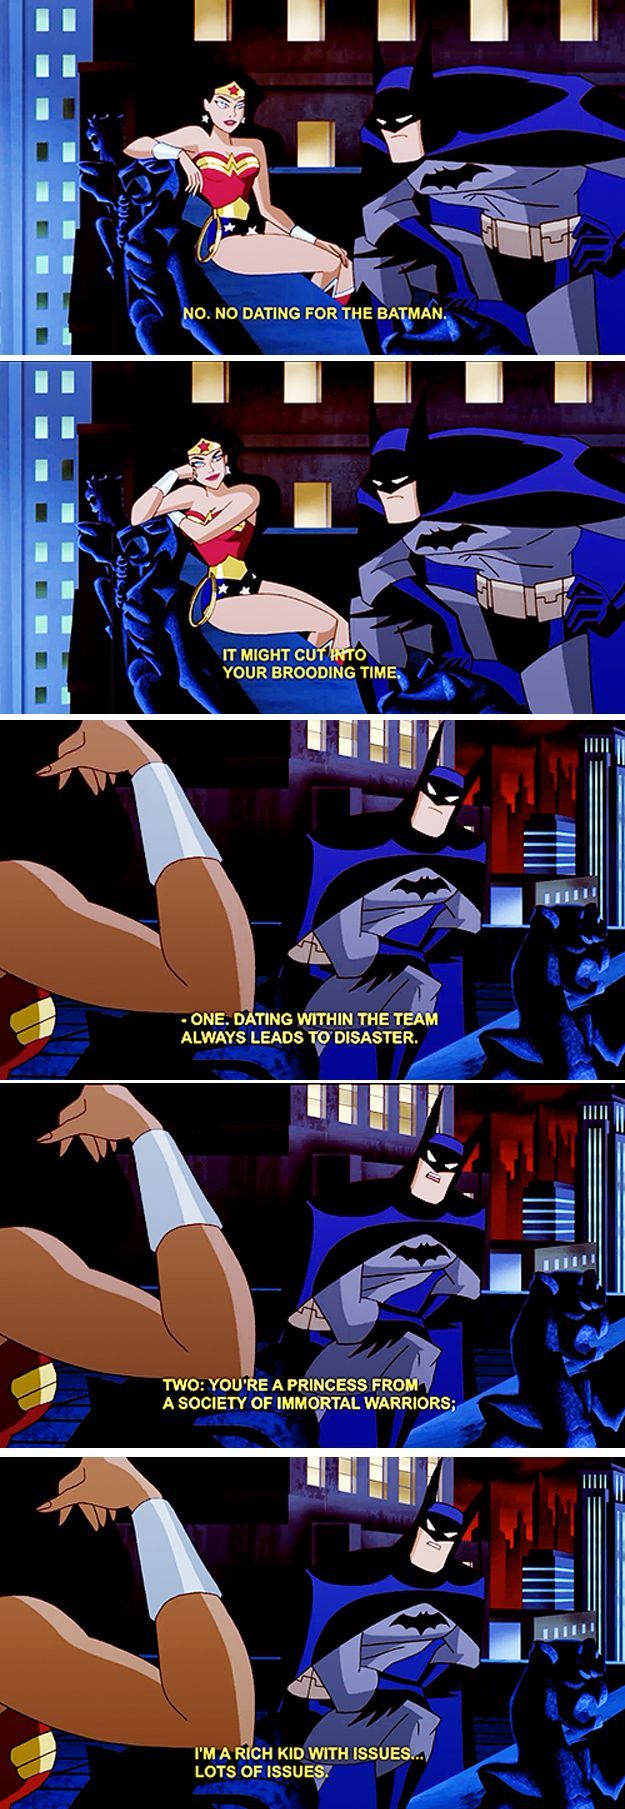 Batman has issues